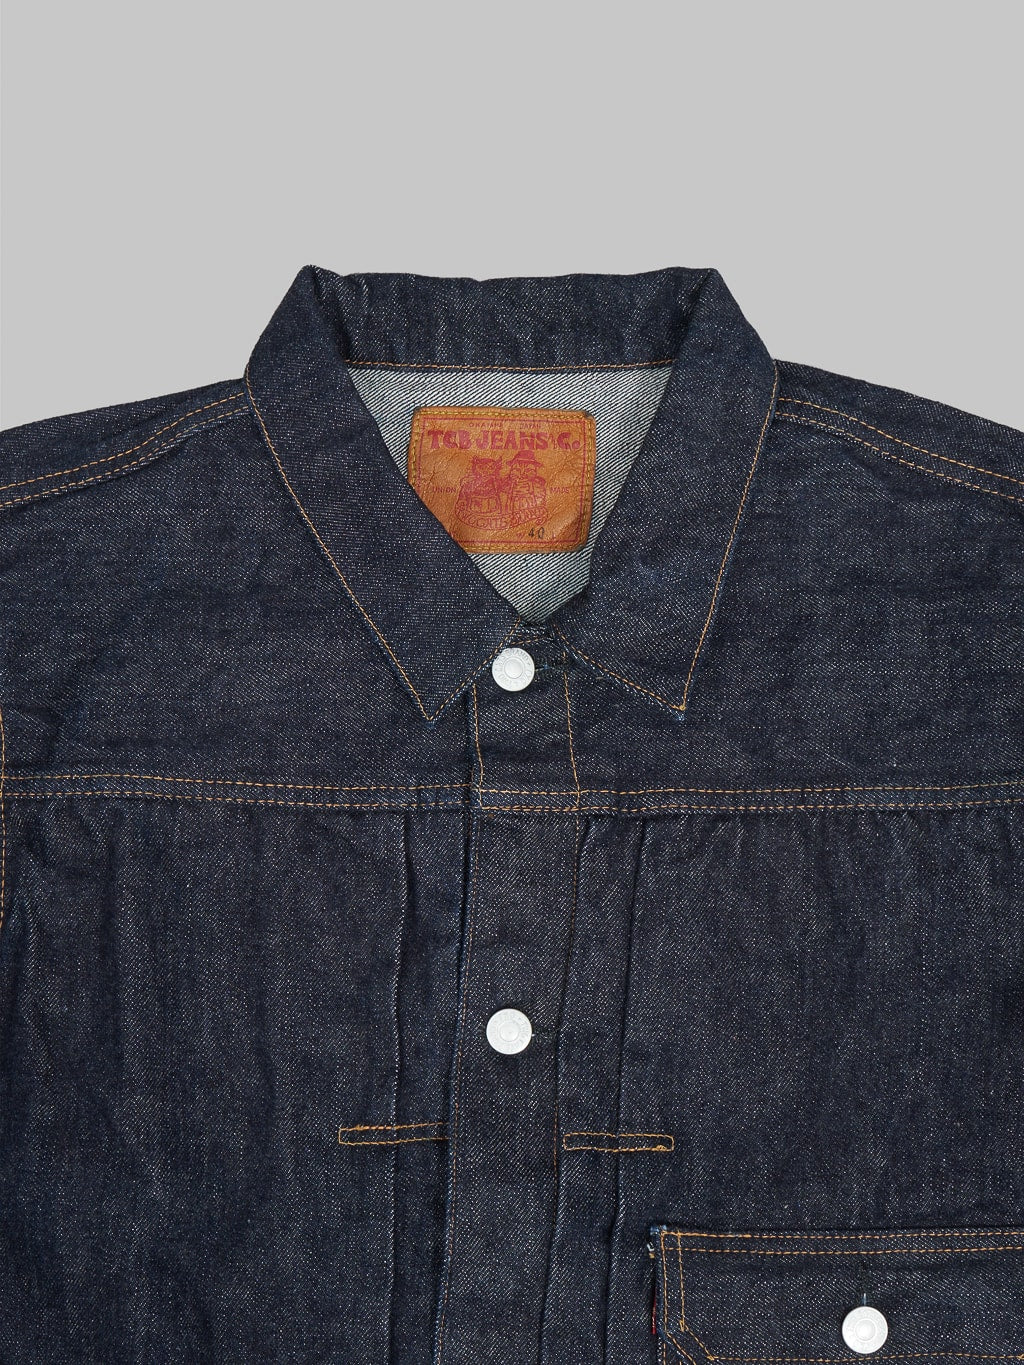 tcb 30s denim jacket collar detail stitching